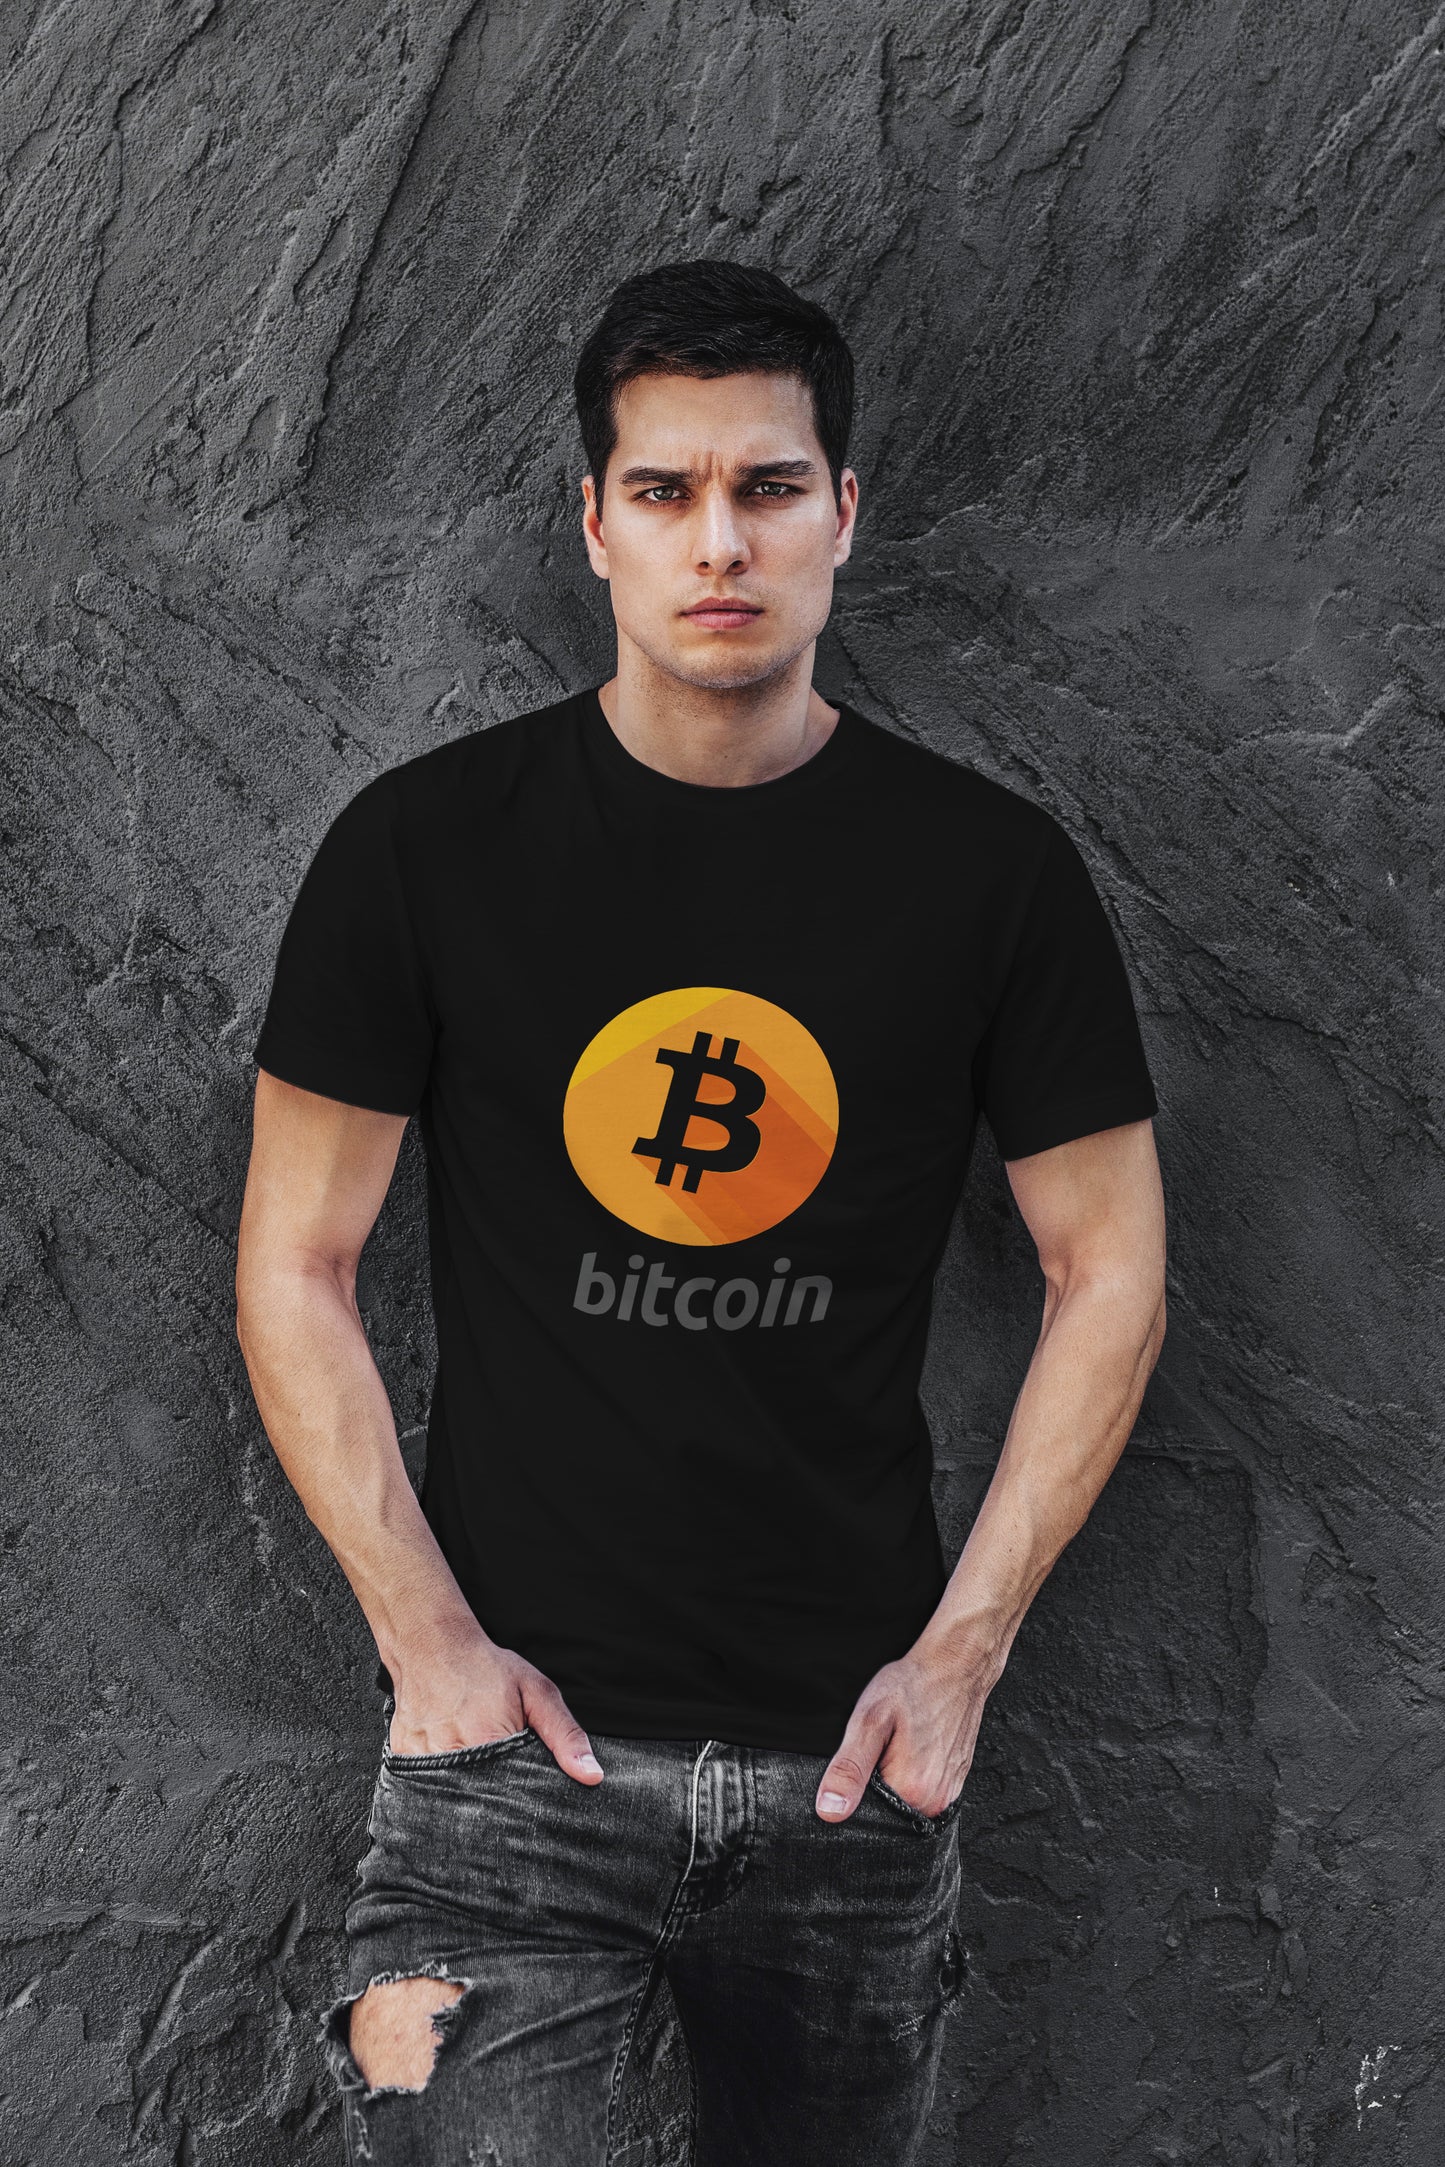 Bitcoin design t shirt